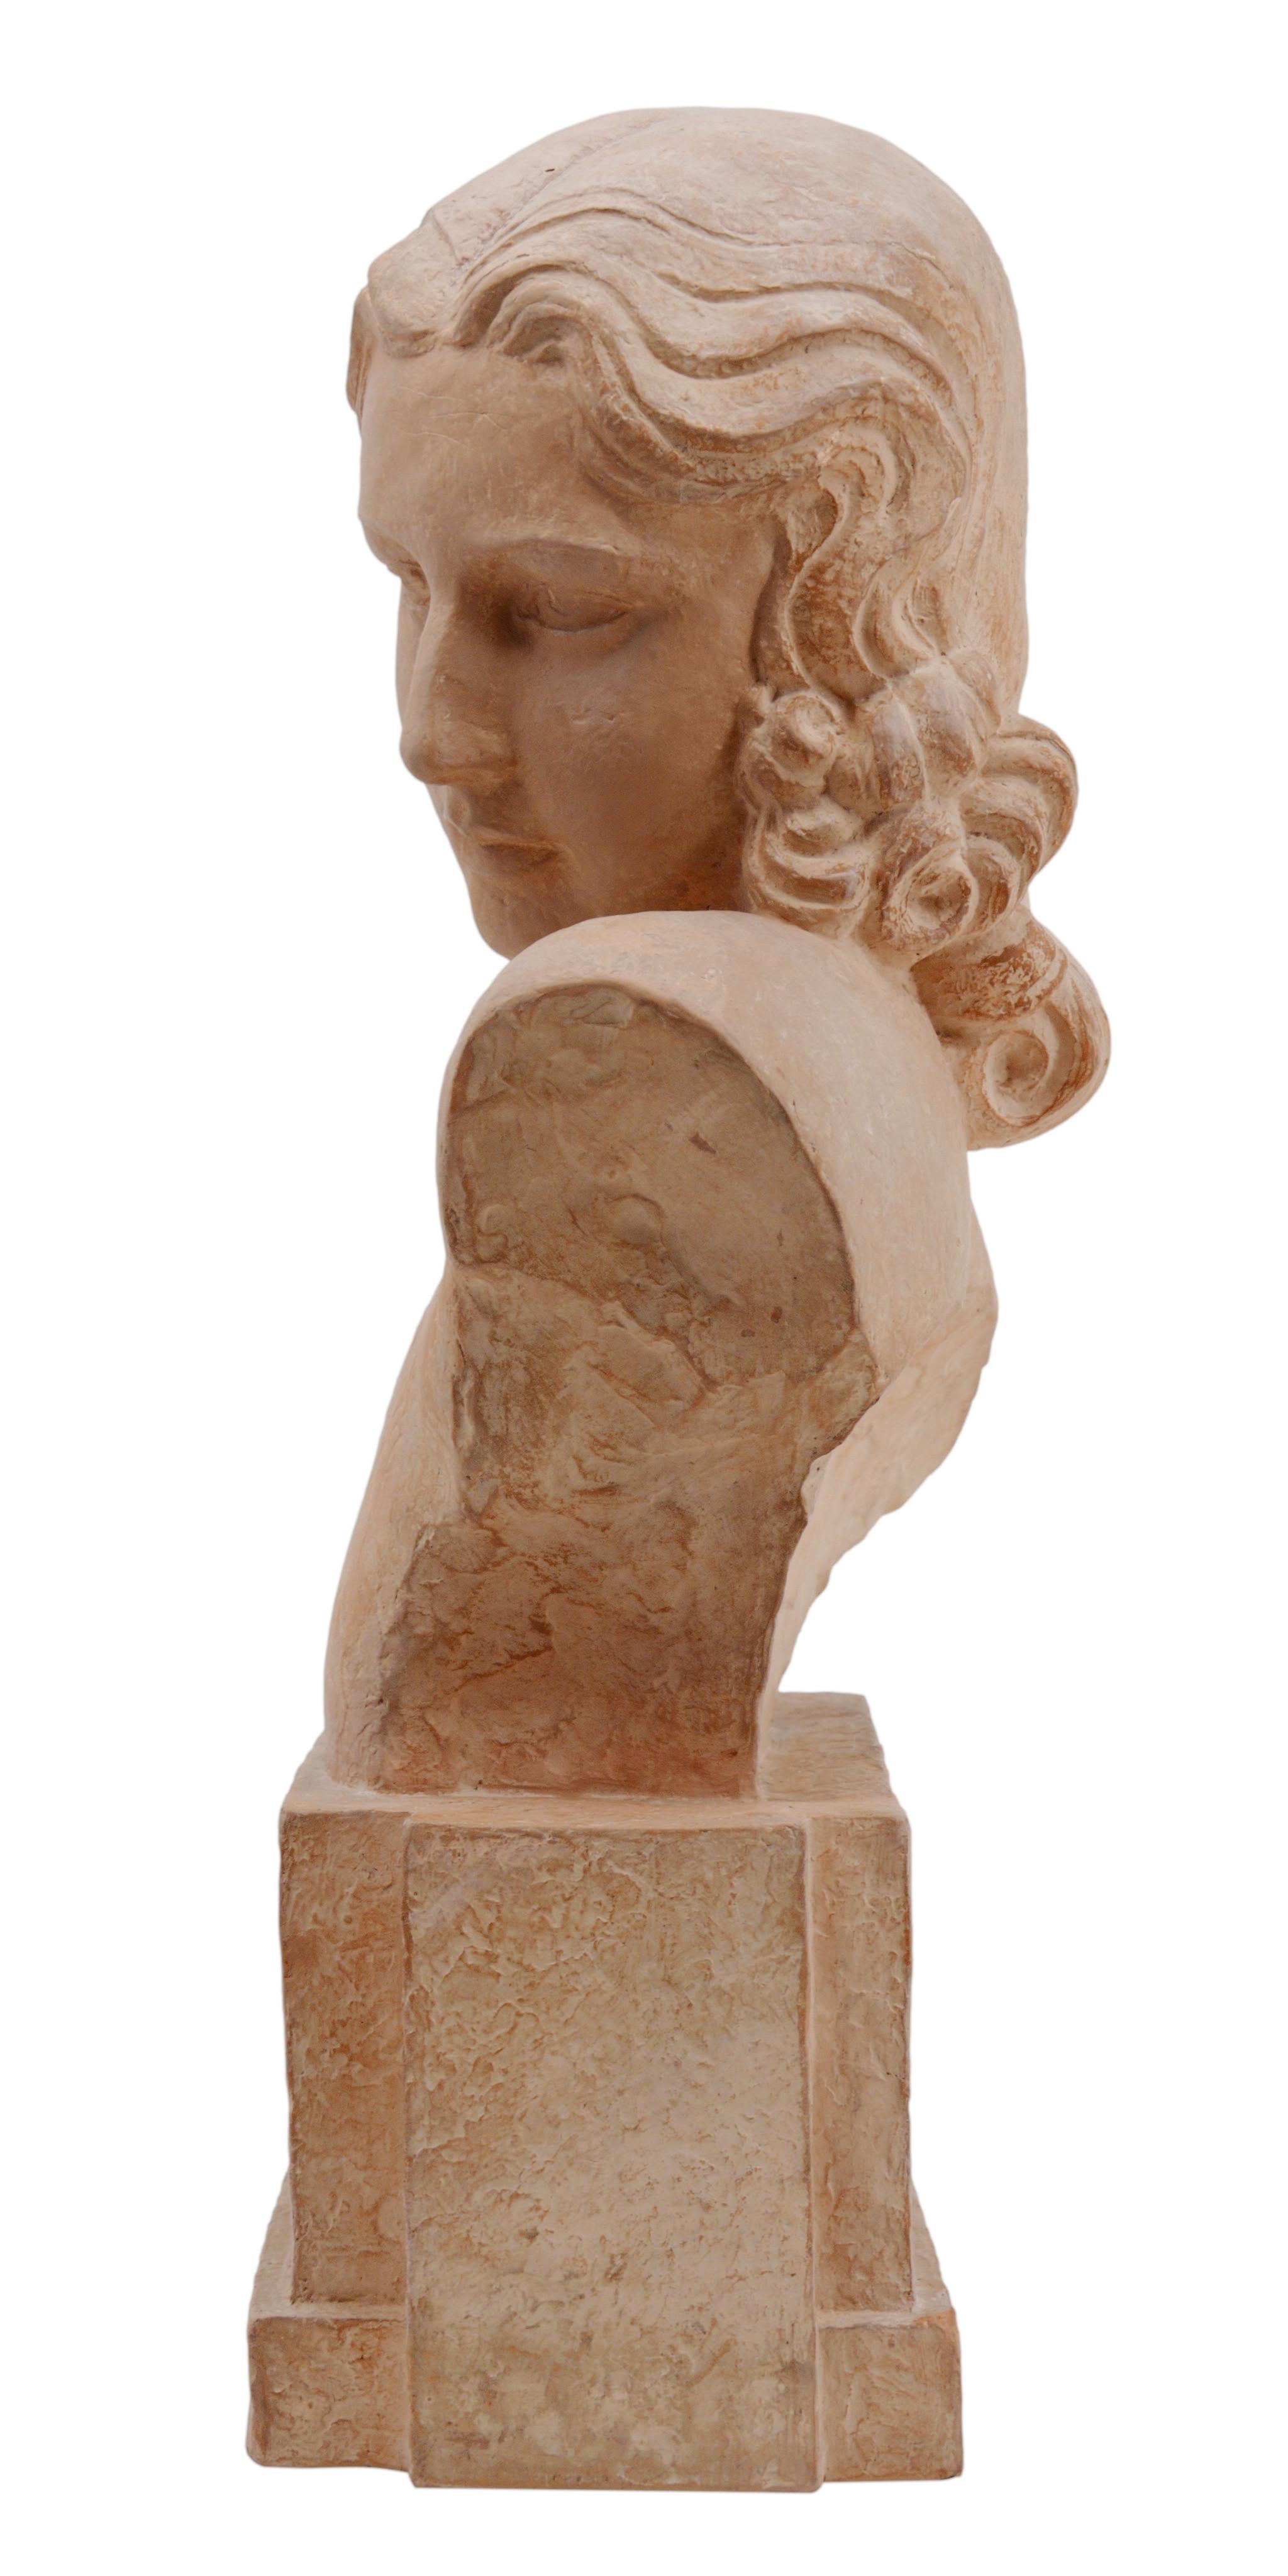 Demetre Chiparus French Art Deco Terracotta Lady Bust Sculpture, 1920s For Sale 1